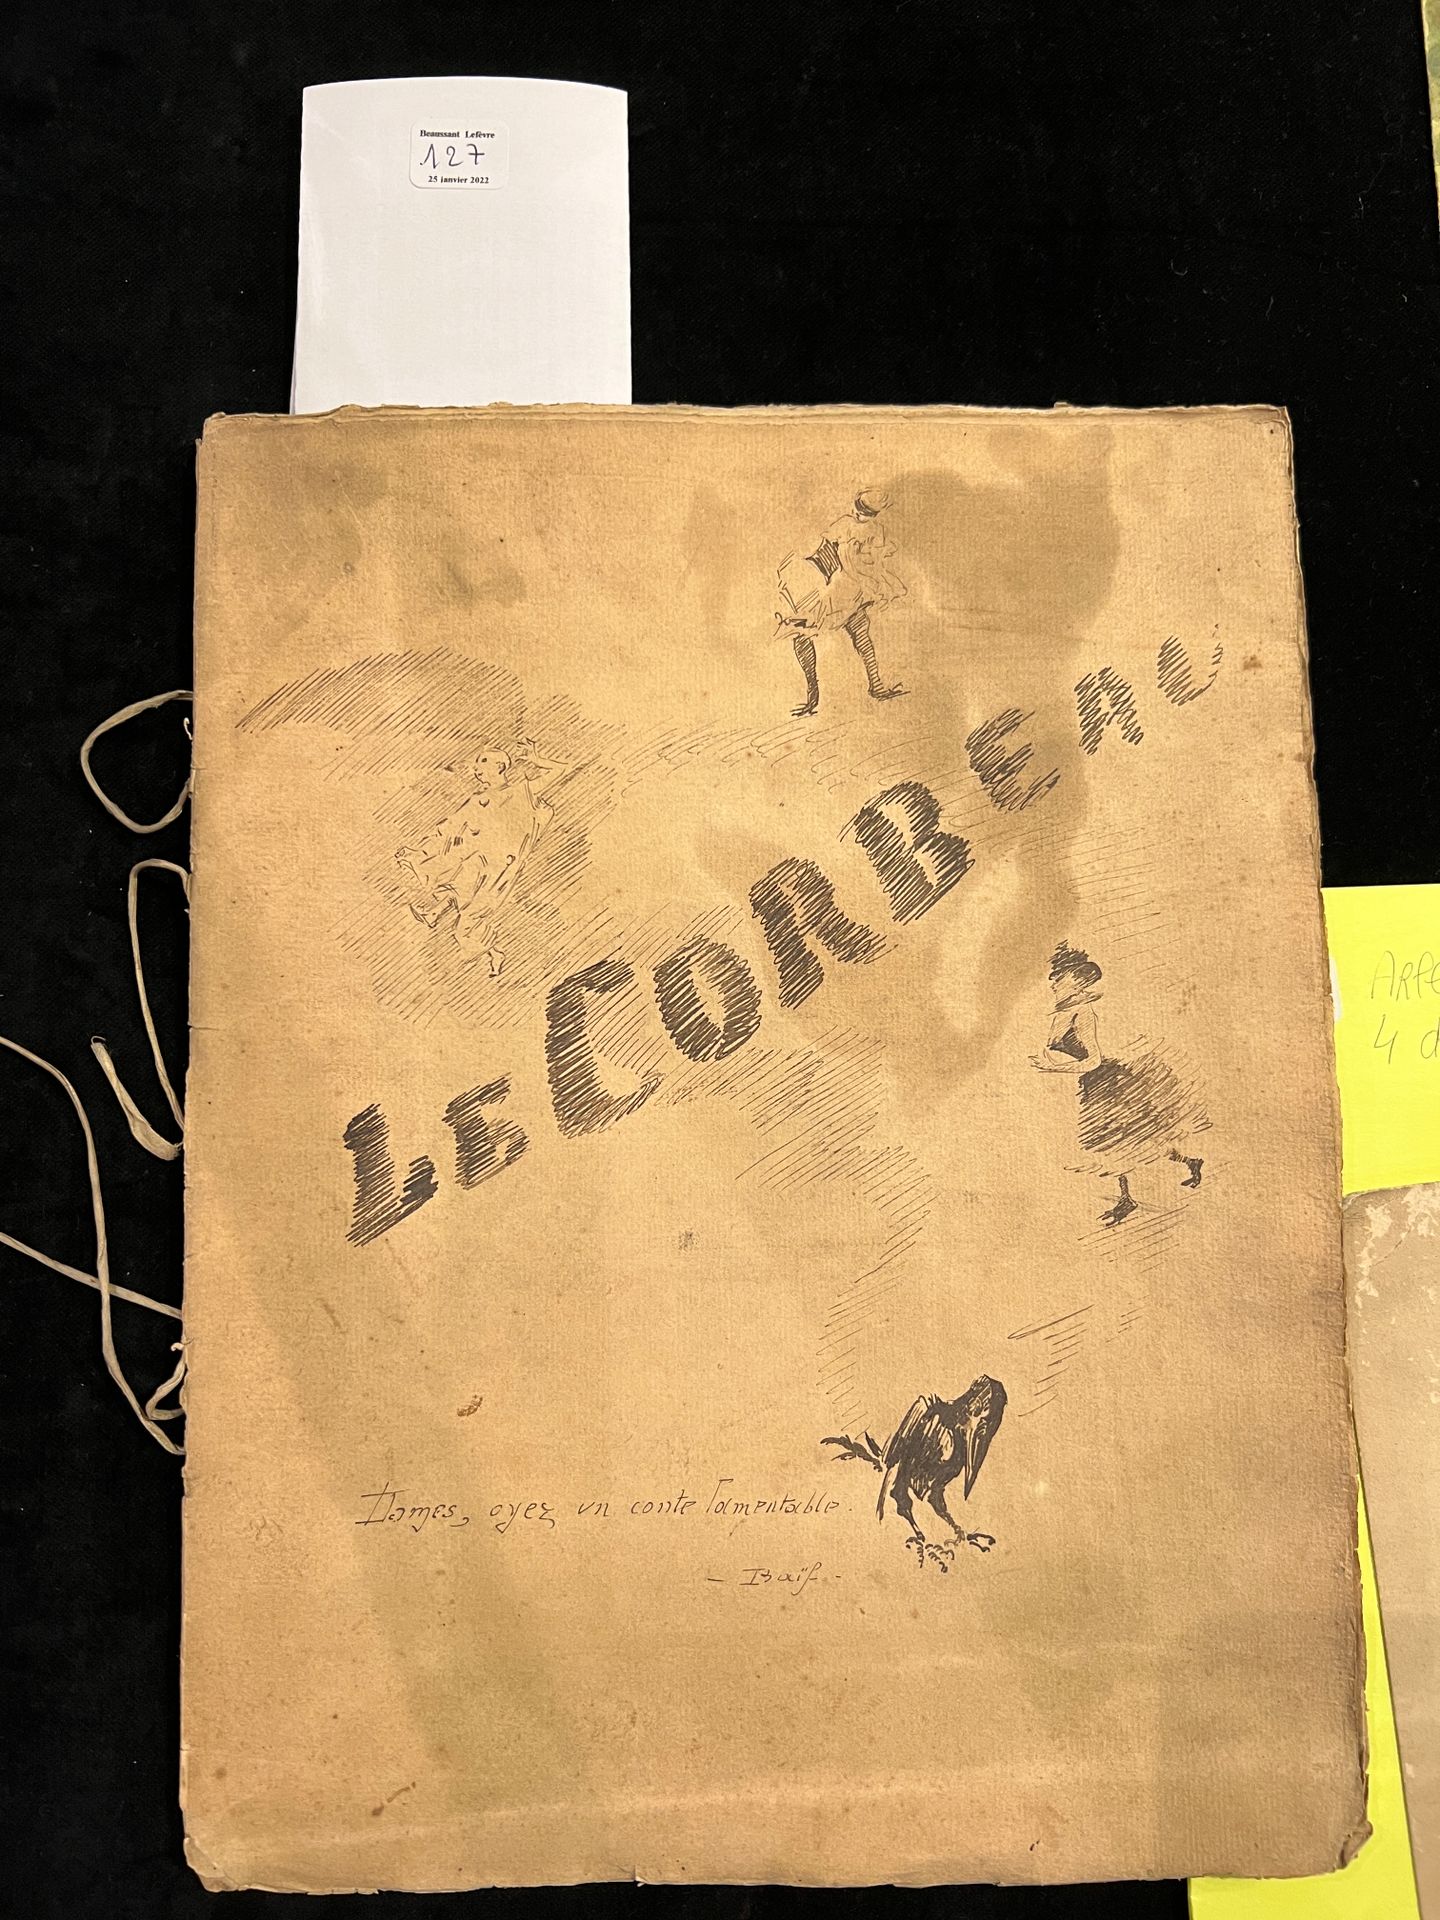 Null 
19世纪末的法国病人




埃德加-爱伦-坡的《乌鸦》插图小册子




8页对开页，上面有笔墨画，31.5 x 24.5厘米。封面上有标题和题词&hellip;